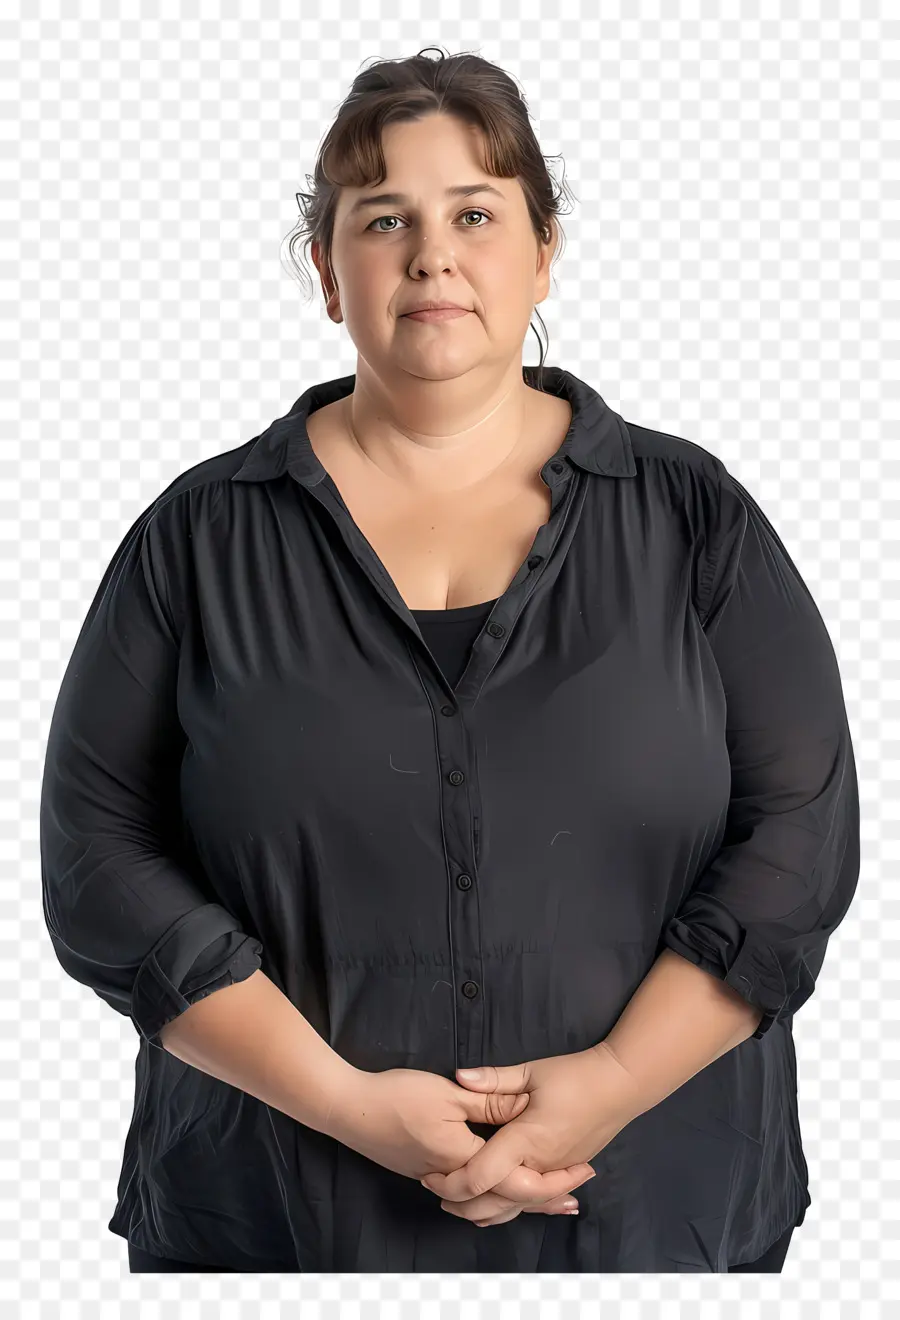 obese woman woman black shirt dark hair crossed arms